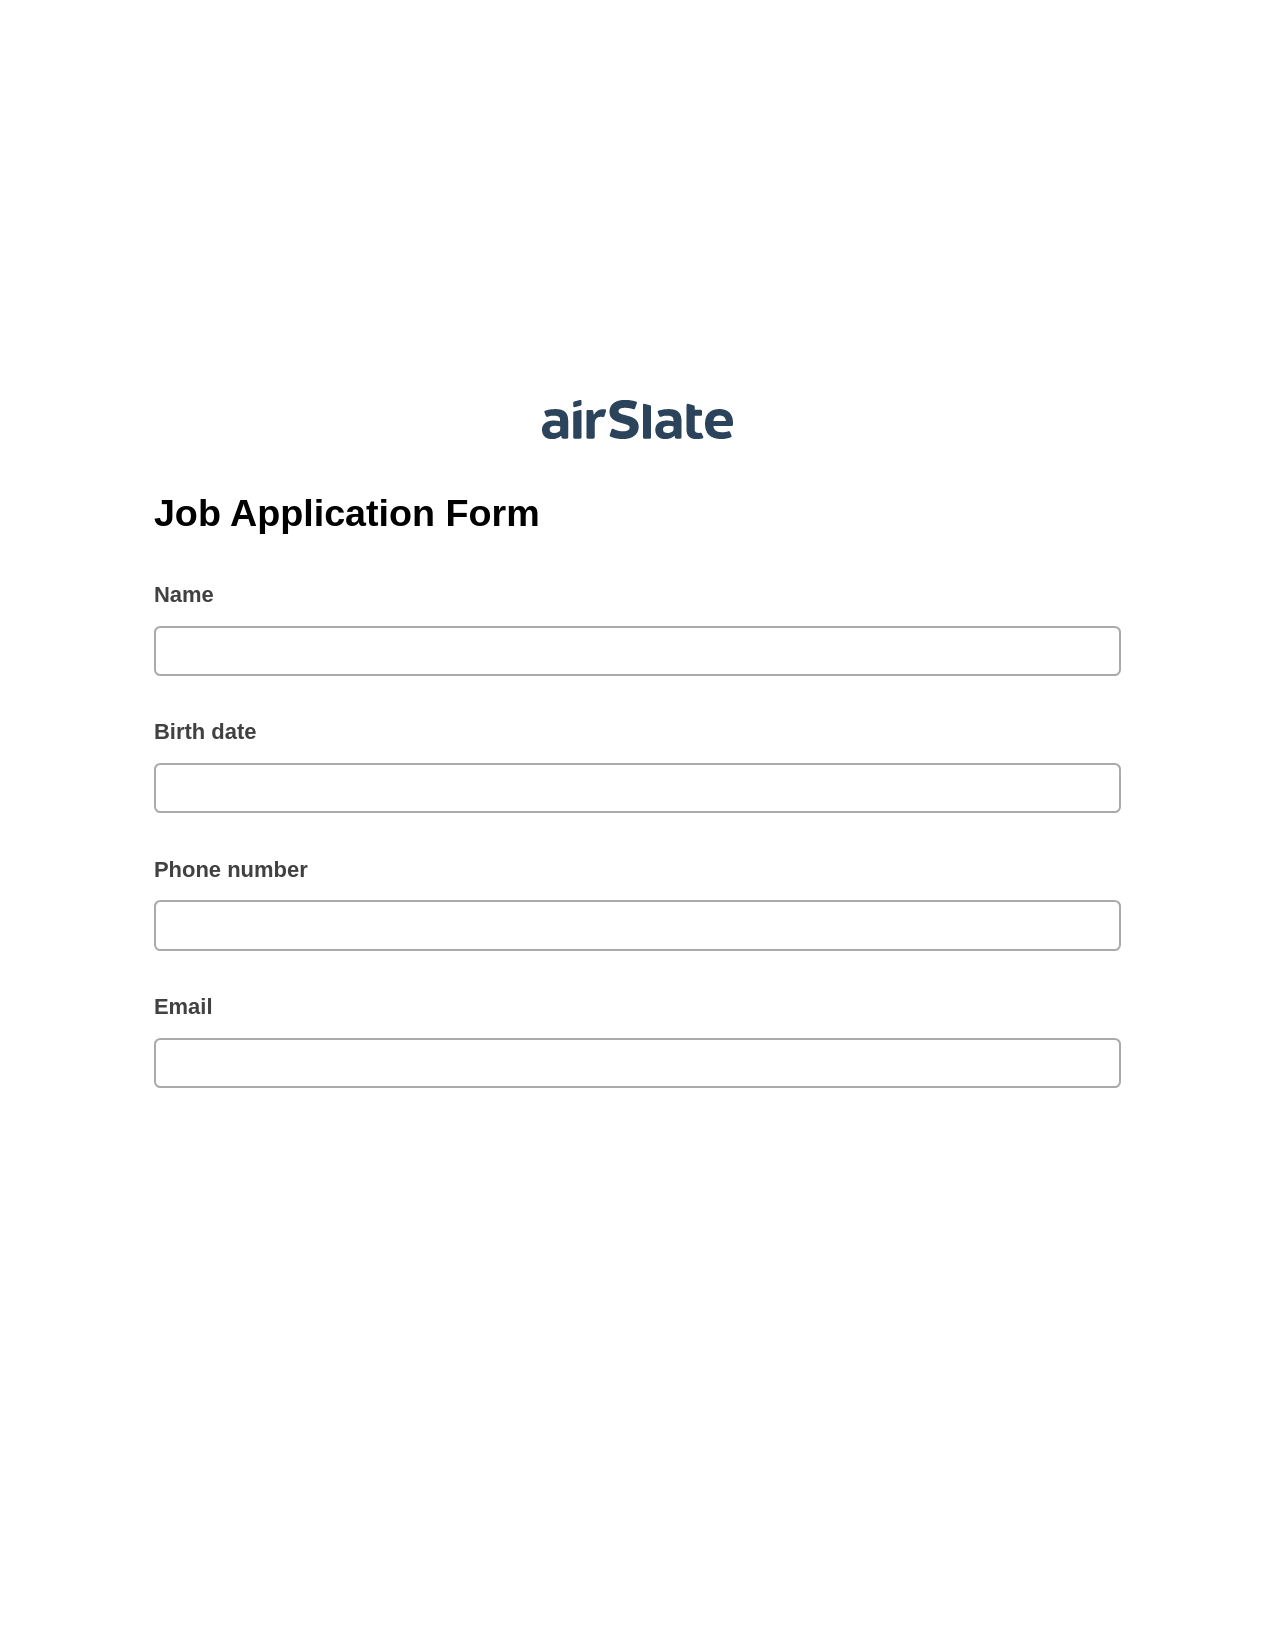 Job Application Form Pre-fill from CSV File Dropdown Options Bot, Webhook Bot, OneDrive Bot